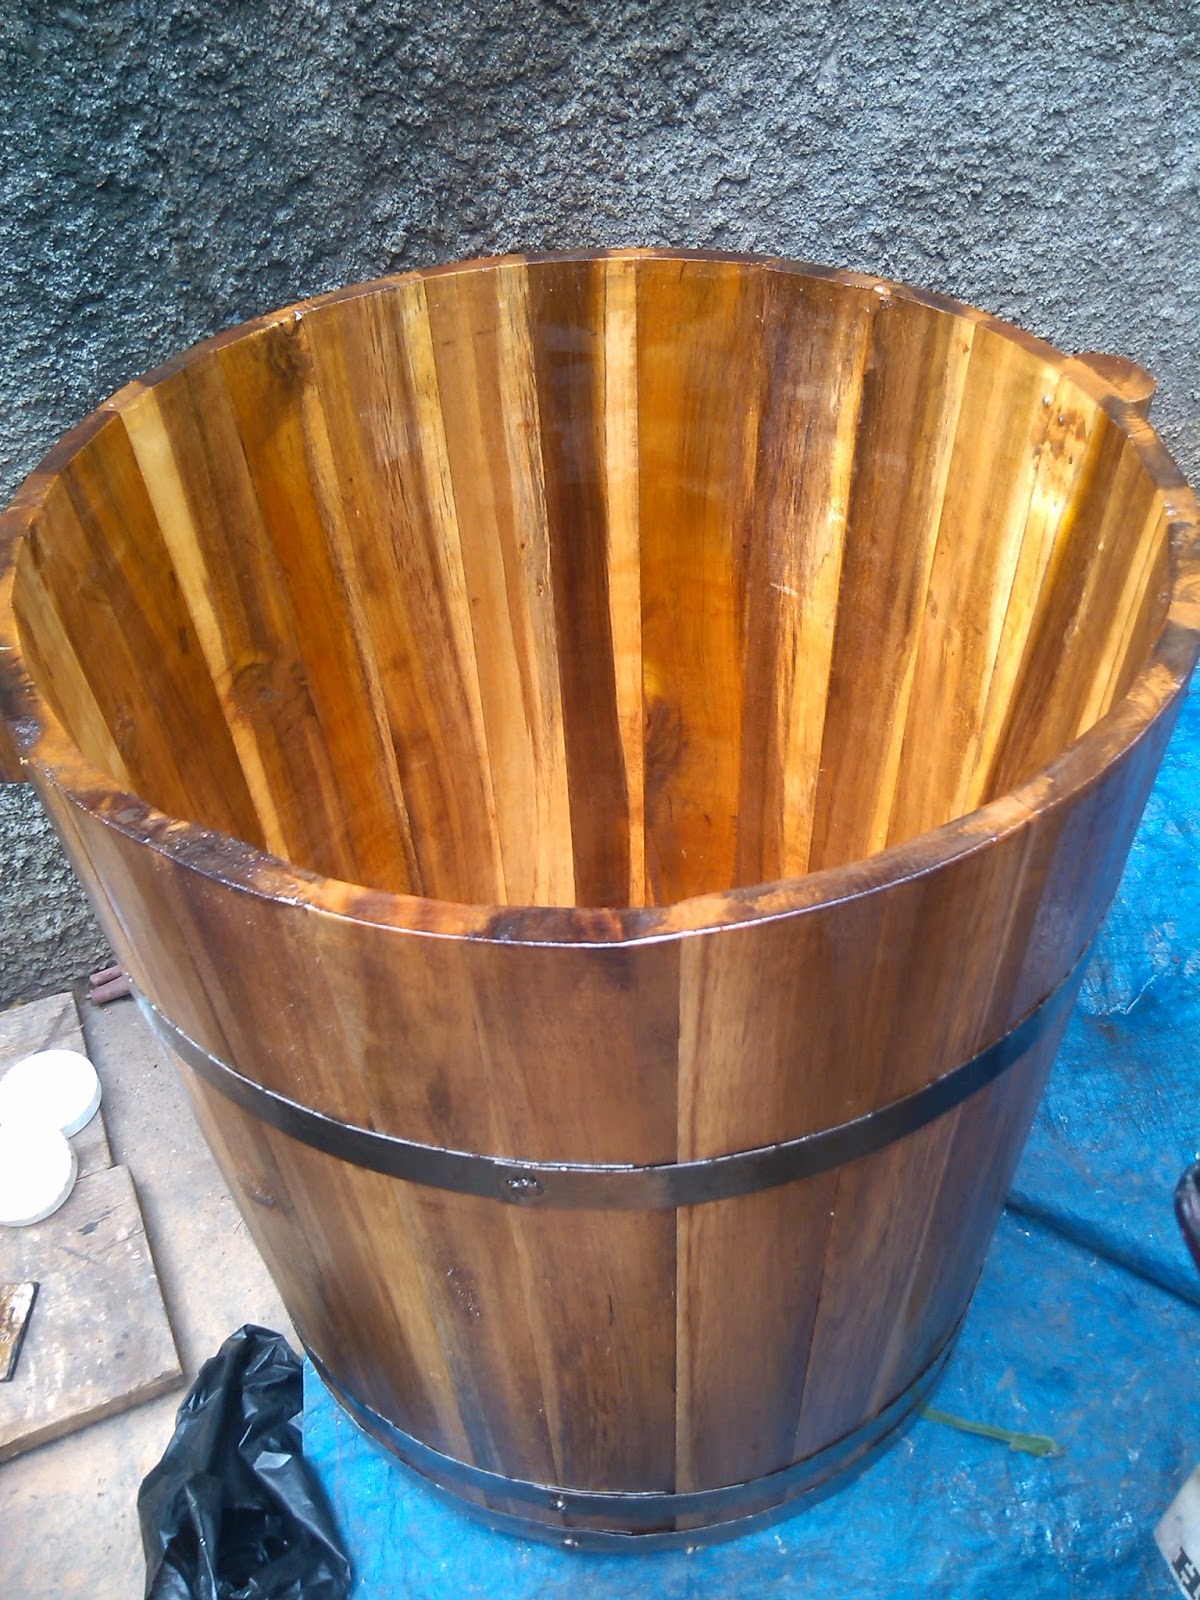 Ember kayu barrel Desember 2012